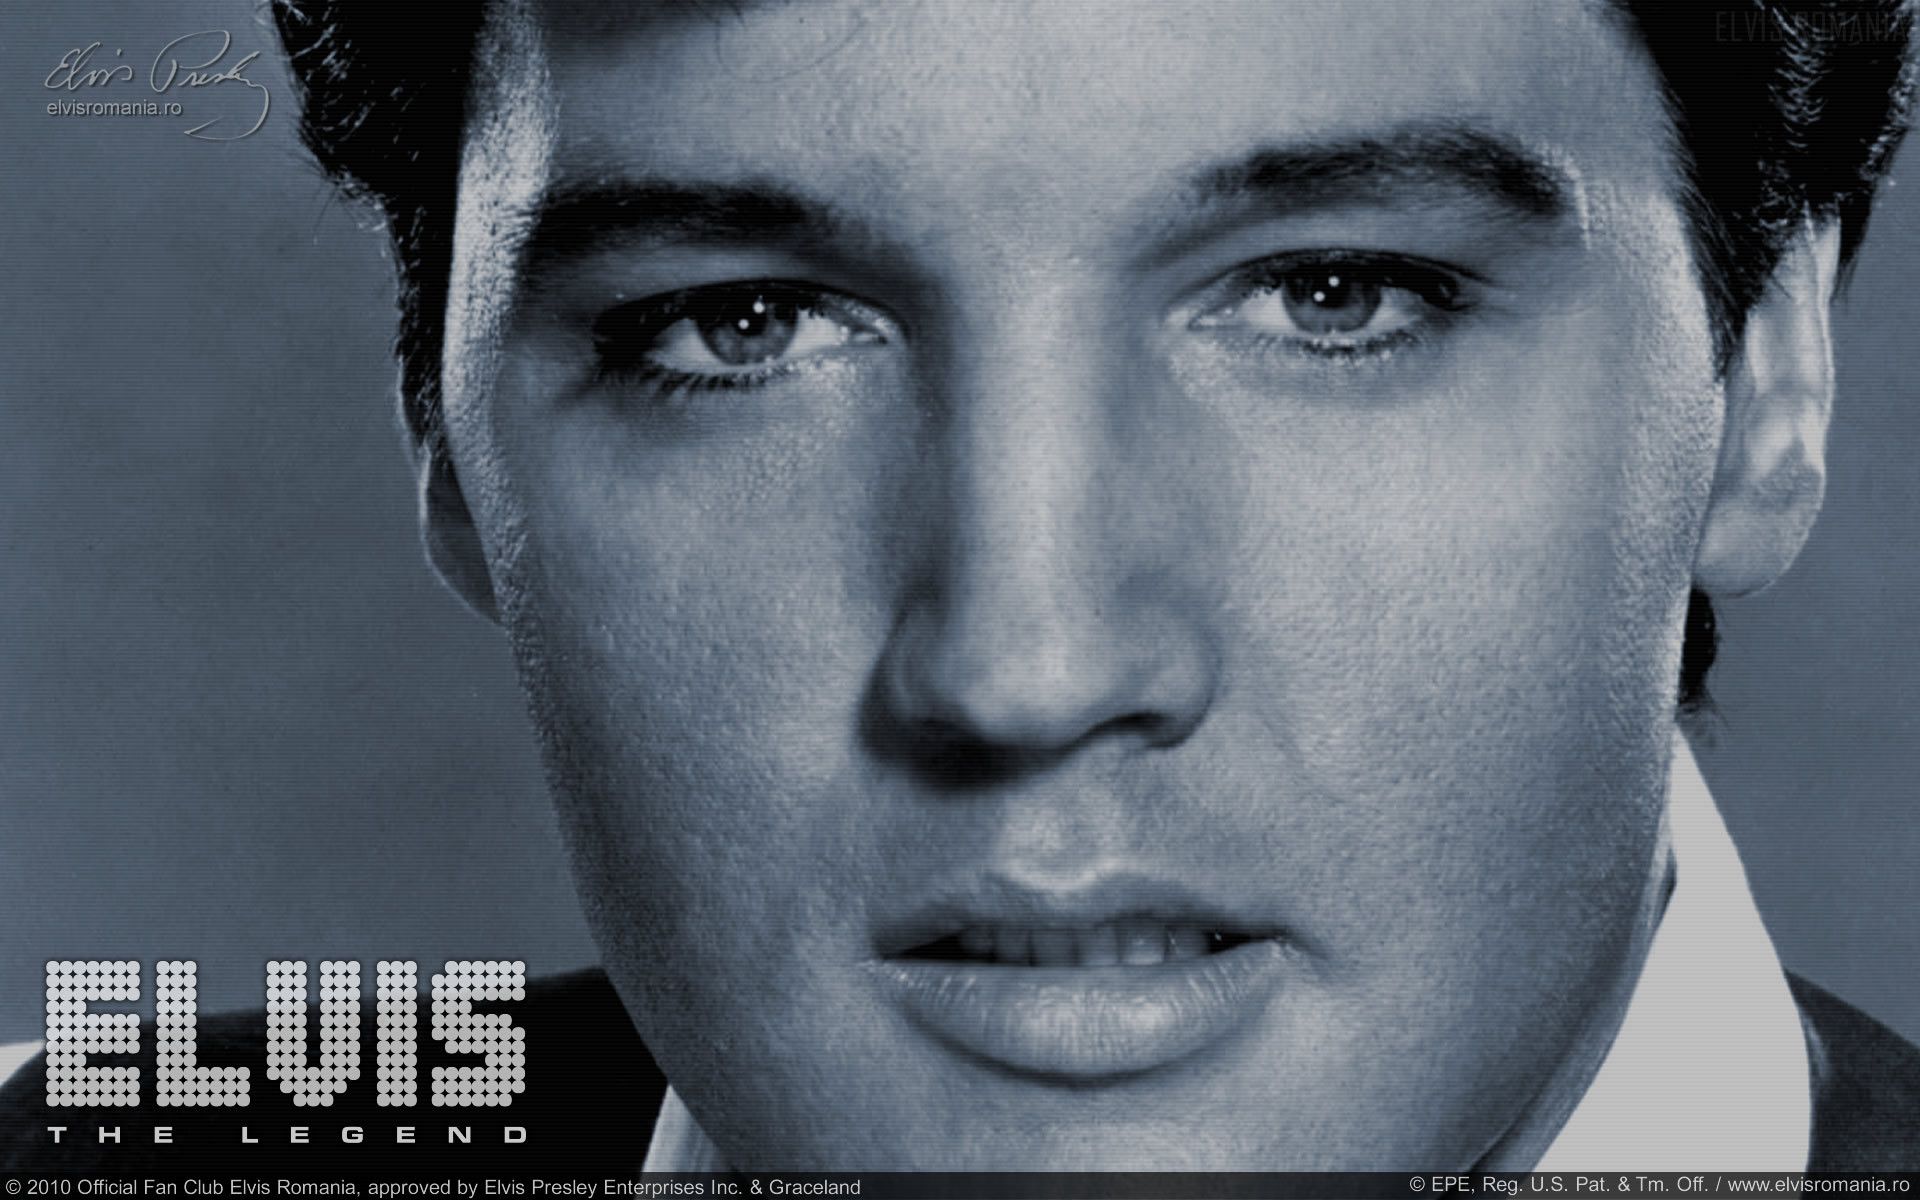 Elvis Presley Wallpaper: Elvis Romania Wallpaper. Elvis presley wallpaper, Elvis wallpaper, Elvis presley image